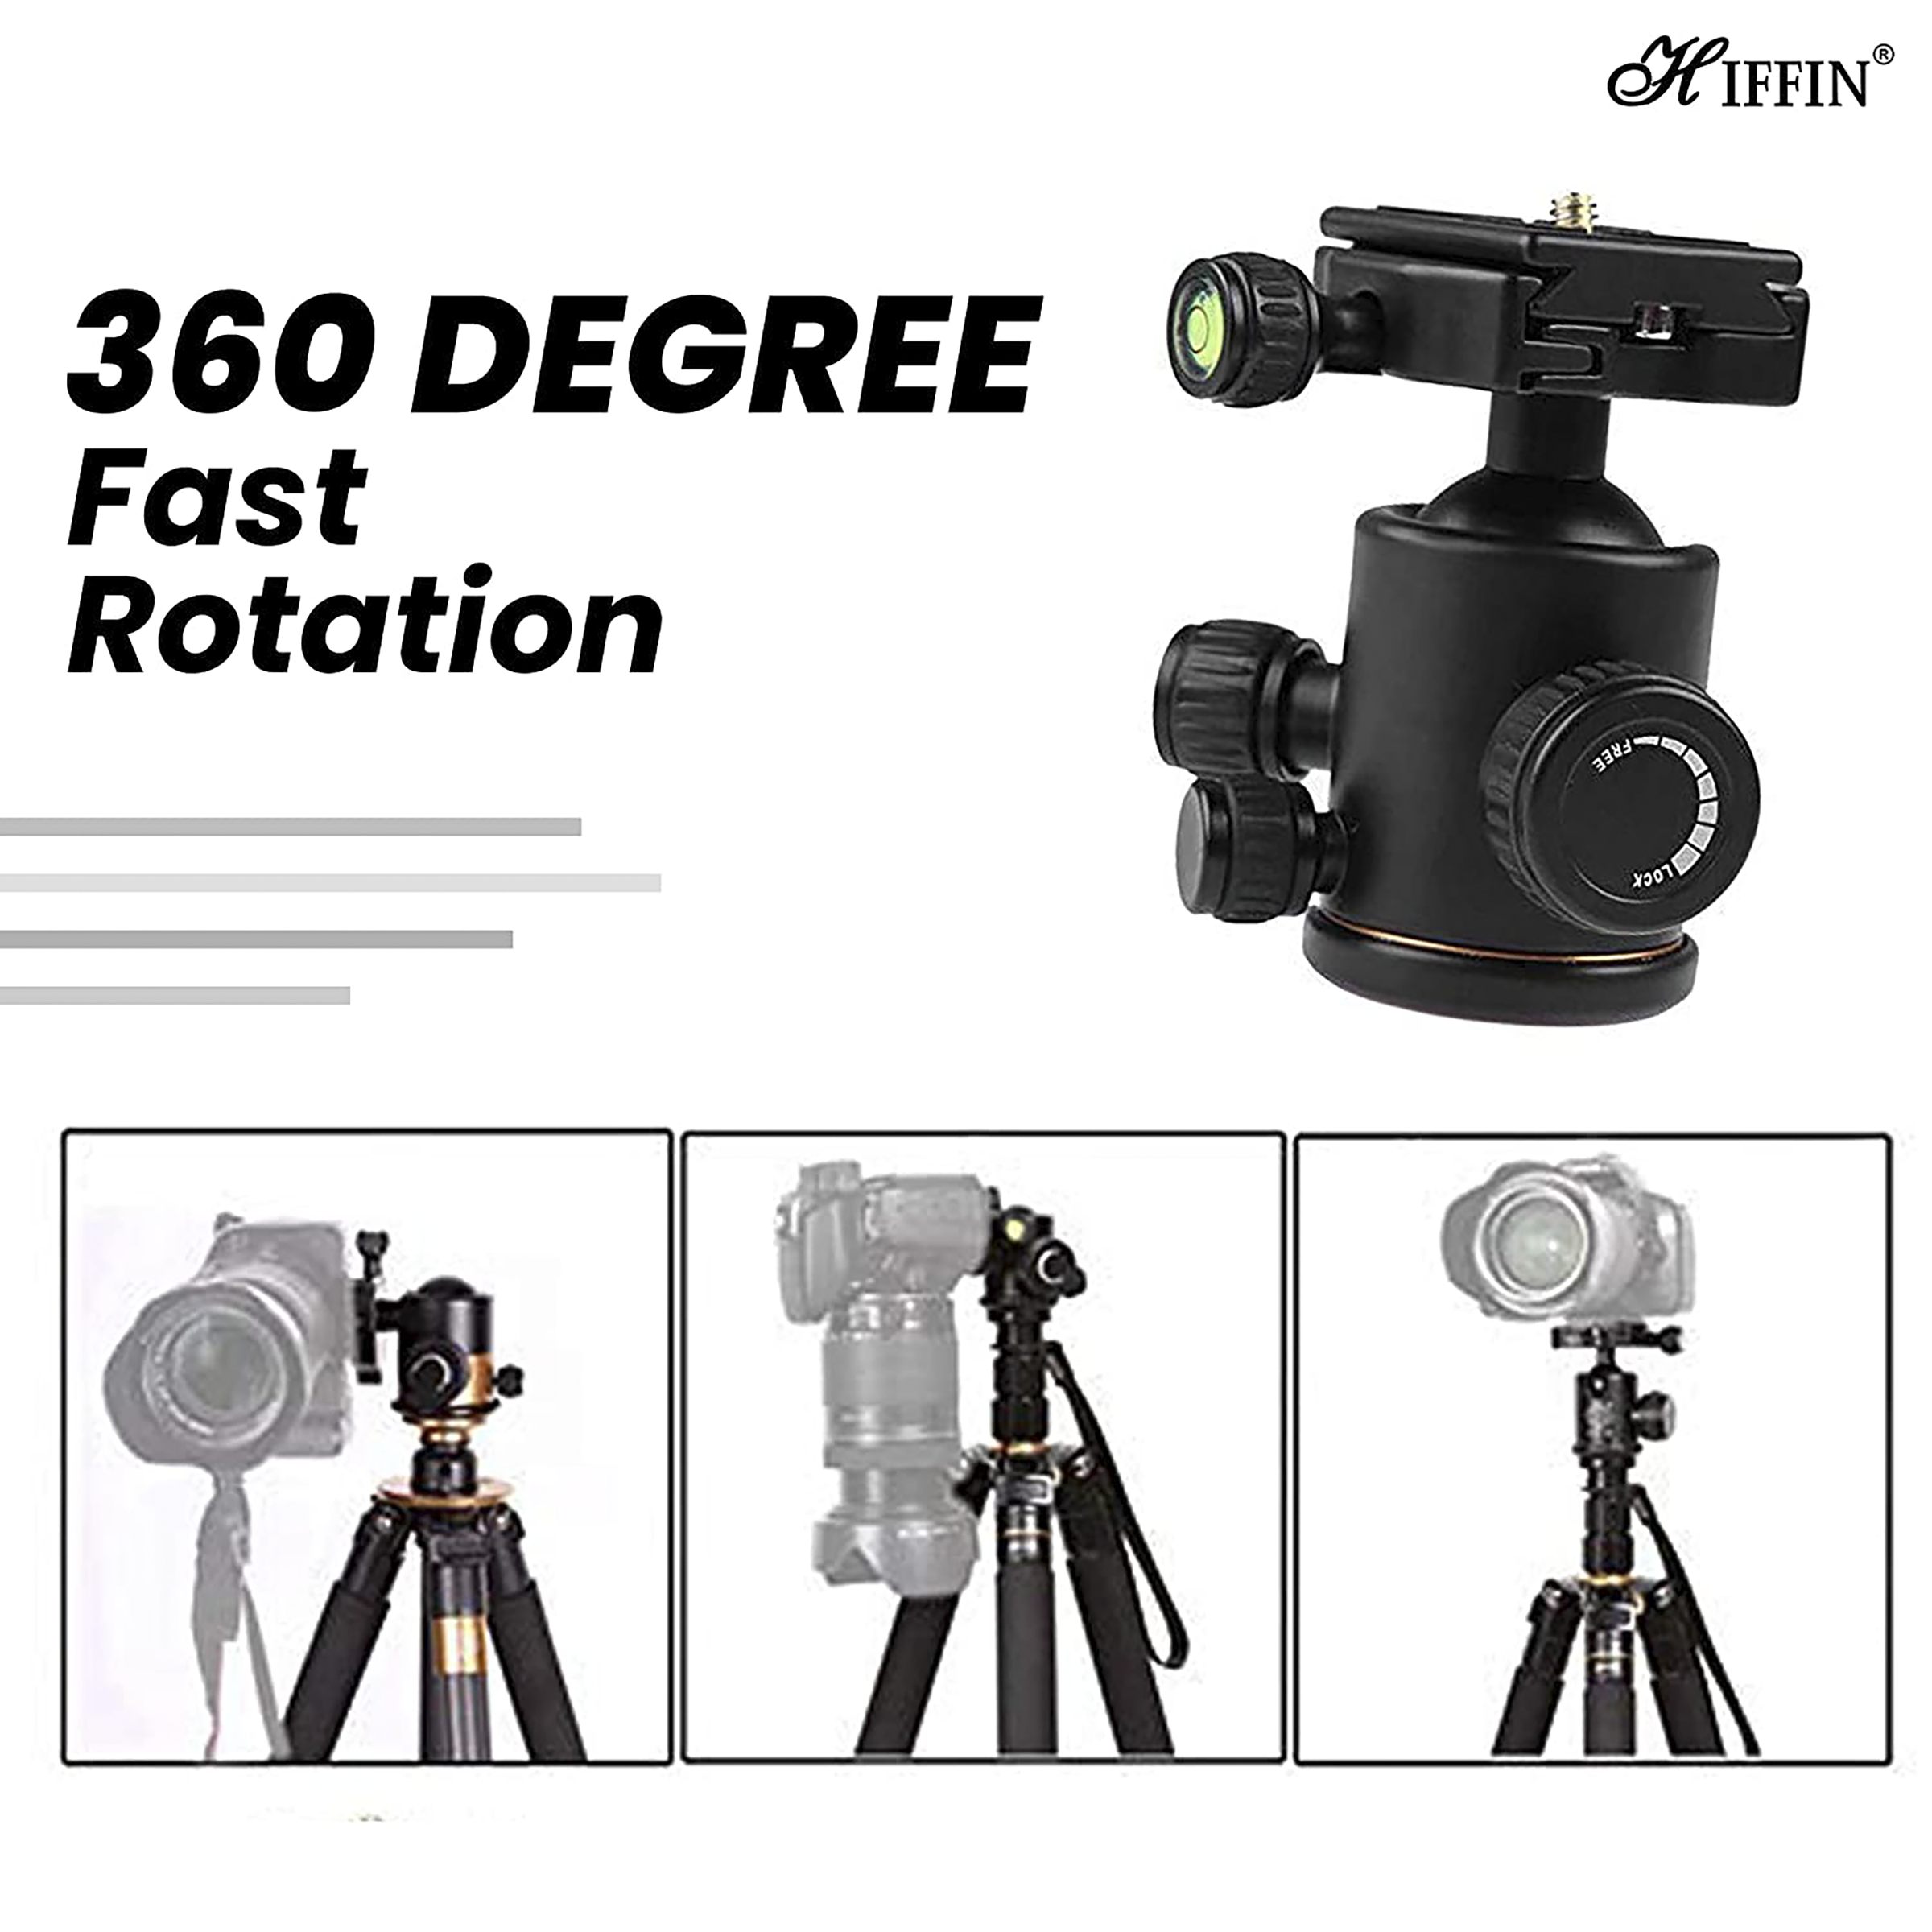 HIFFIN Professional Tripod Mount for Camera (360 Degree Rotation, Black)_3